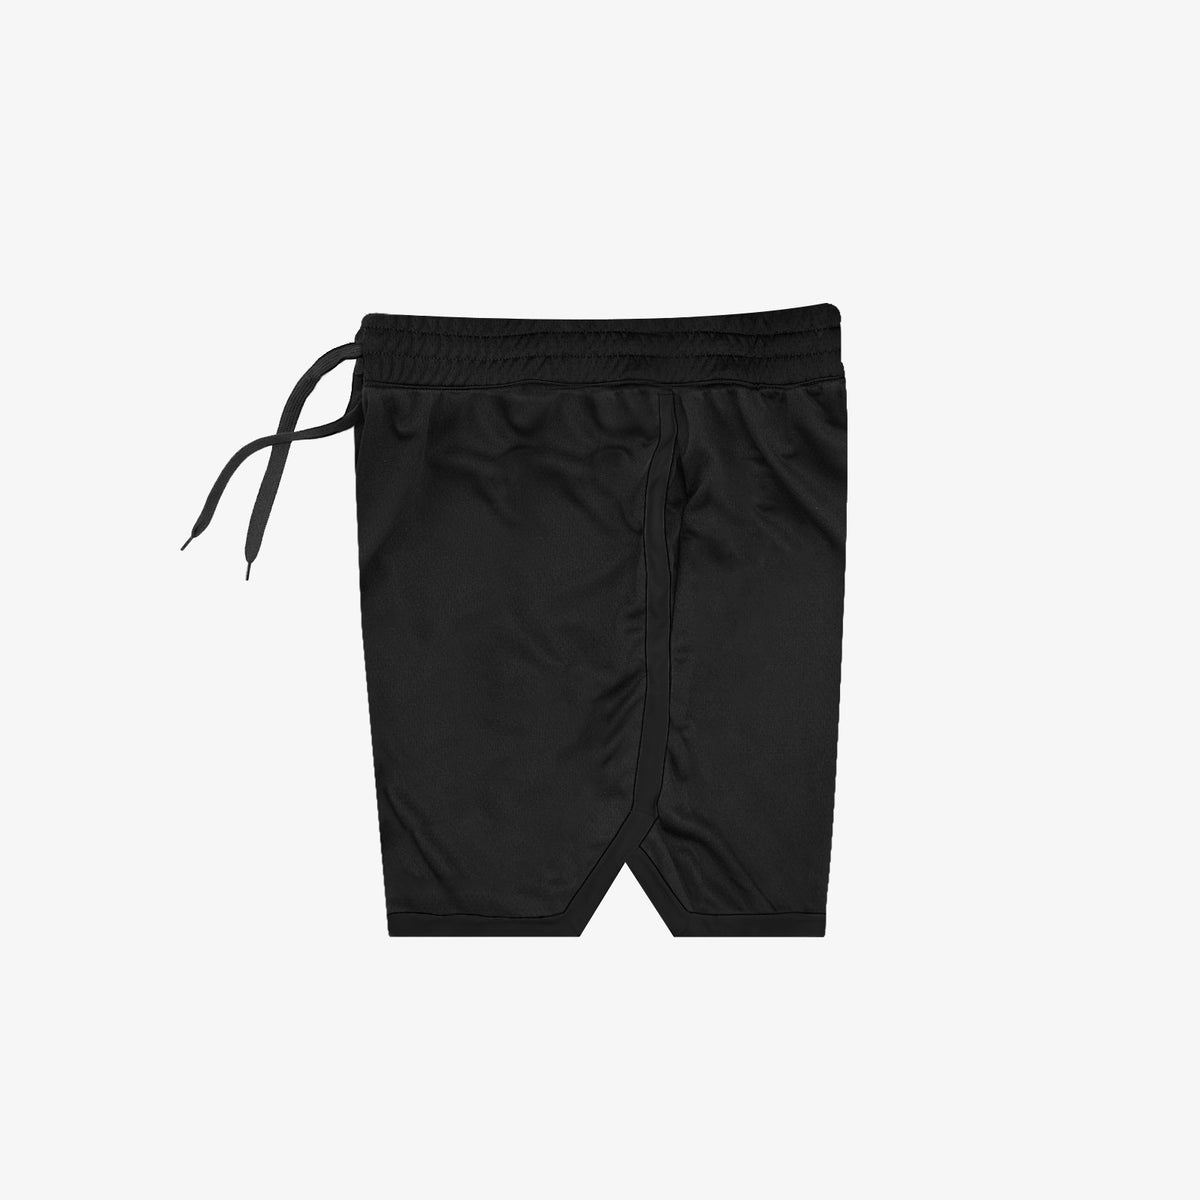 Basketball Pocket Shorts - Black/Black